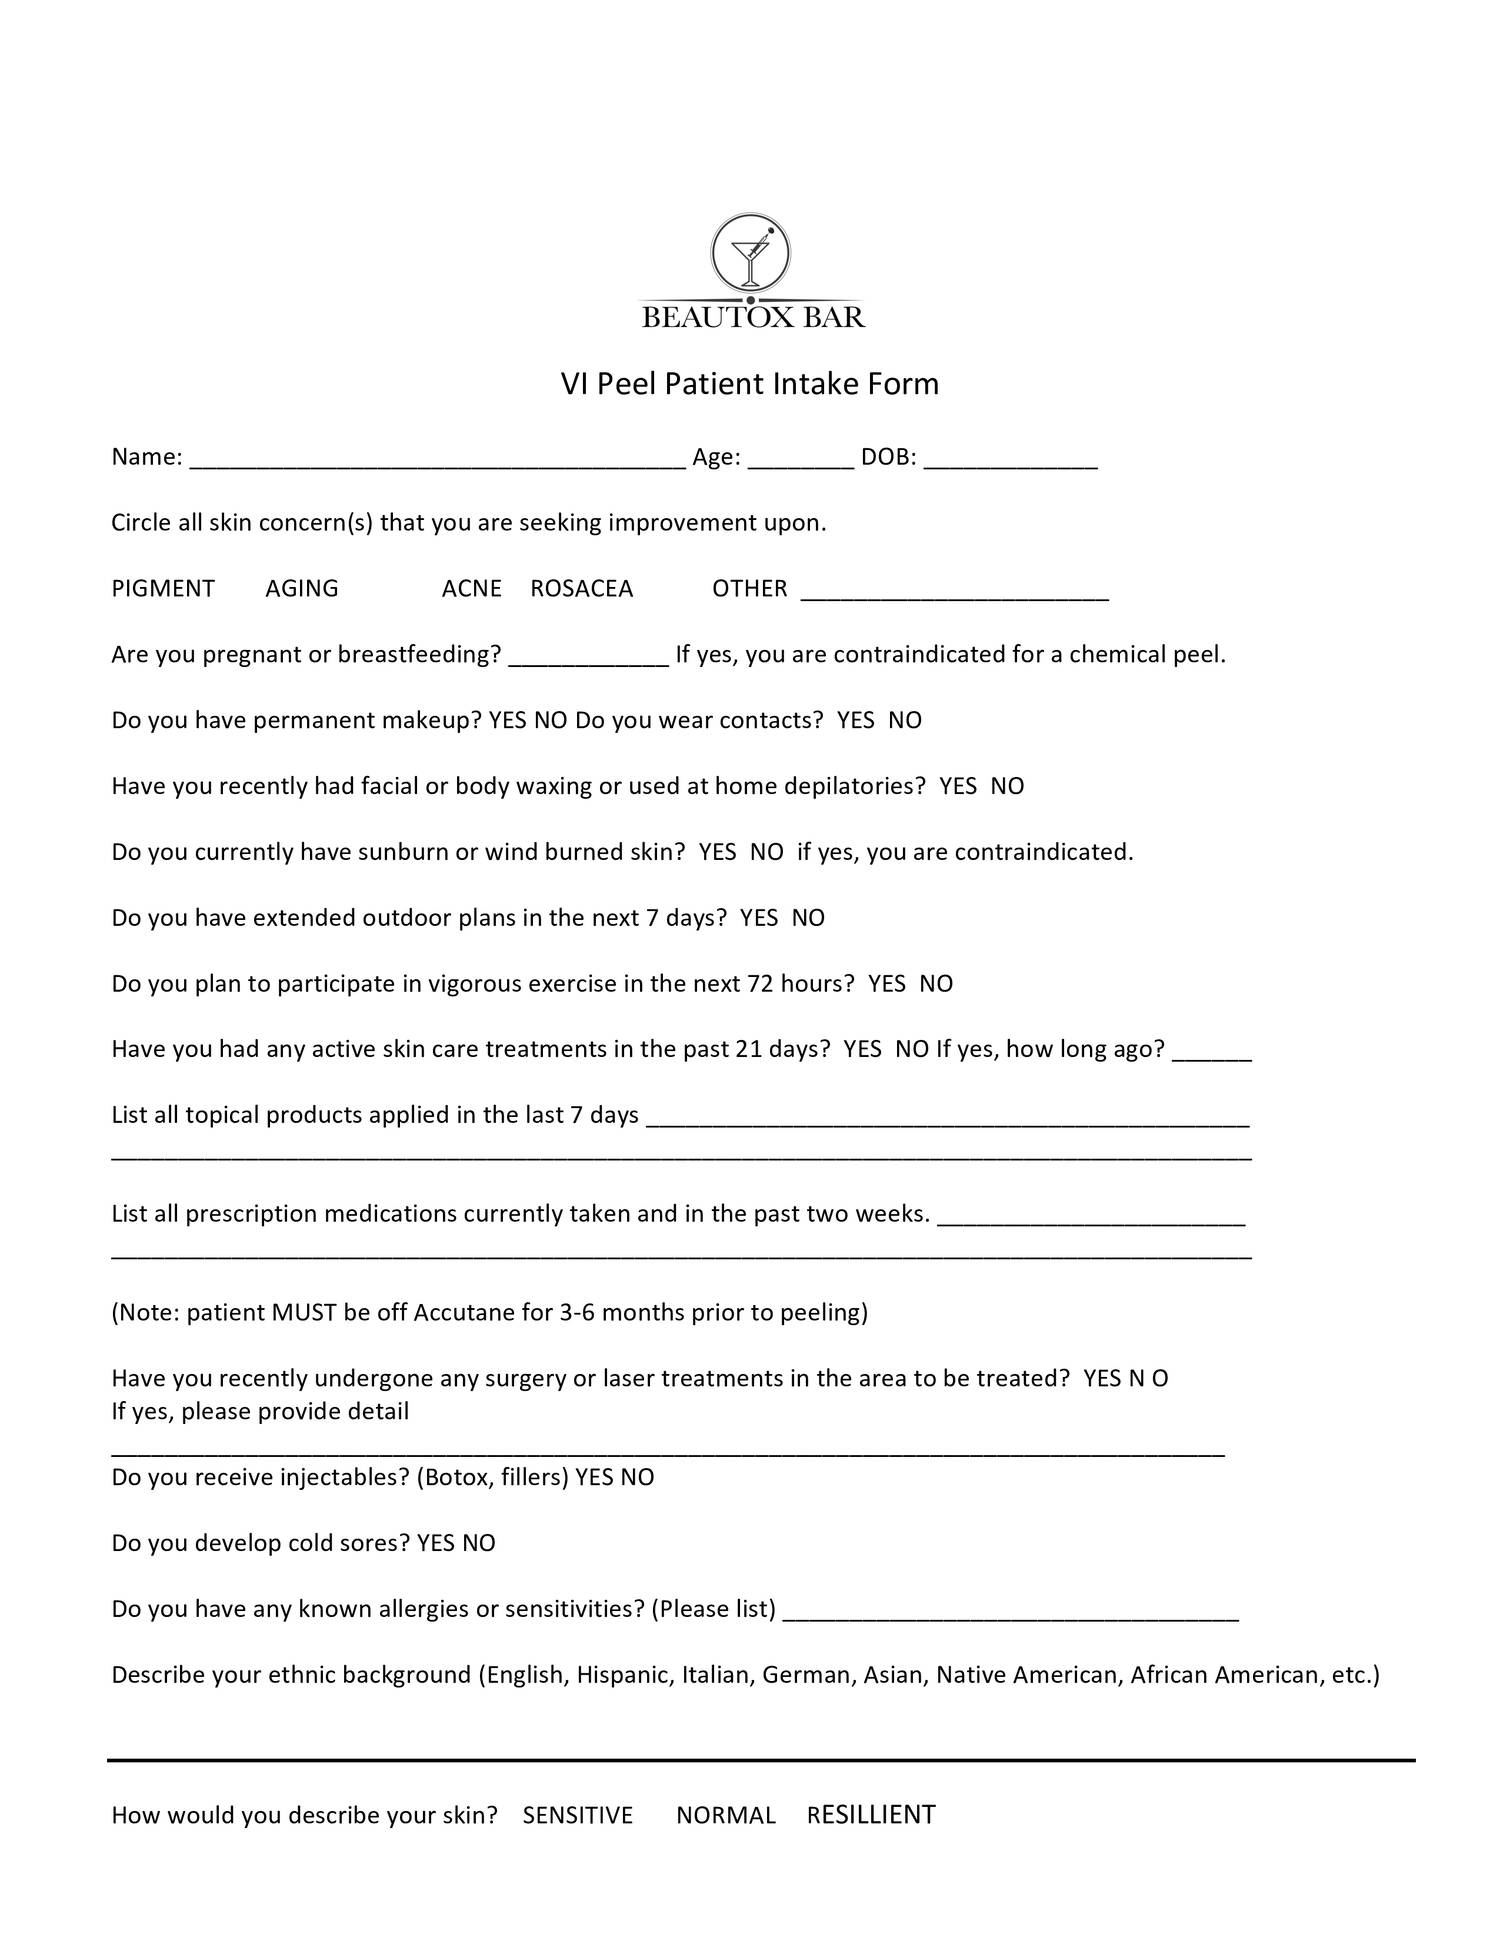 VI Peel Patient Intake Form pdf DocDroid